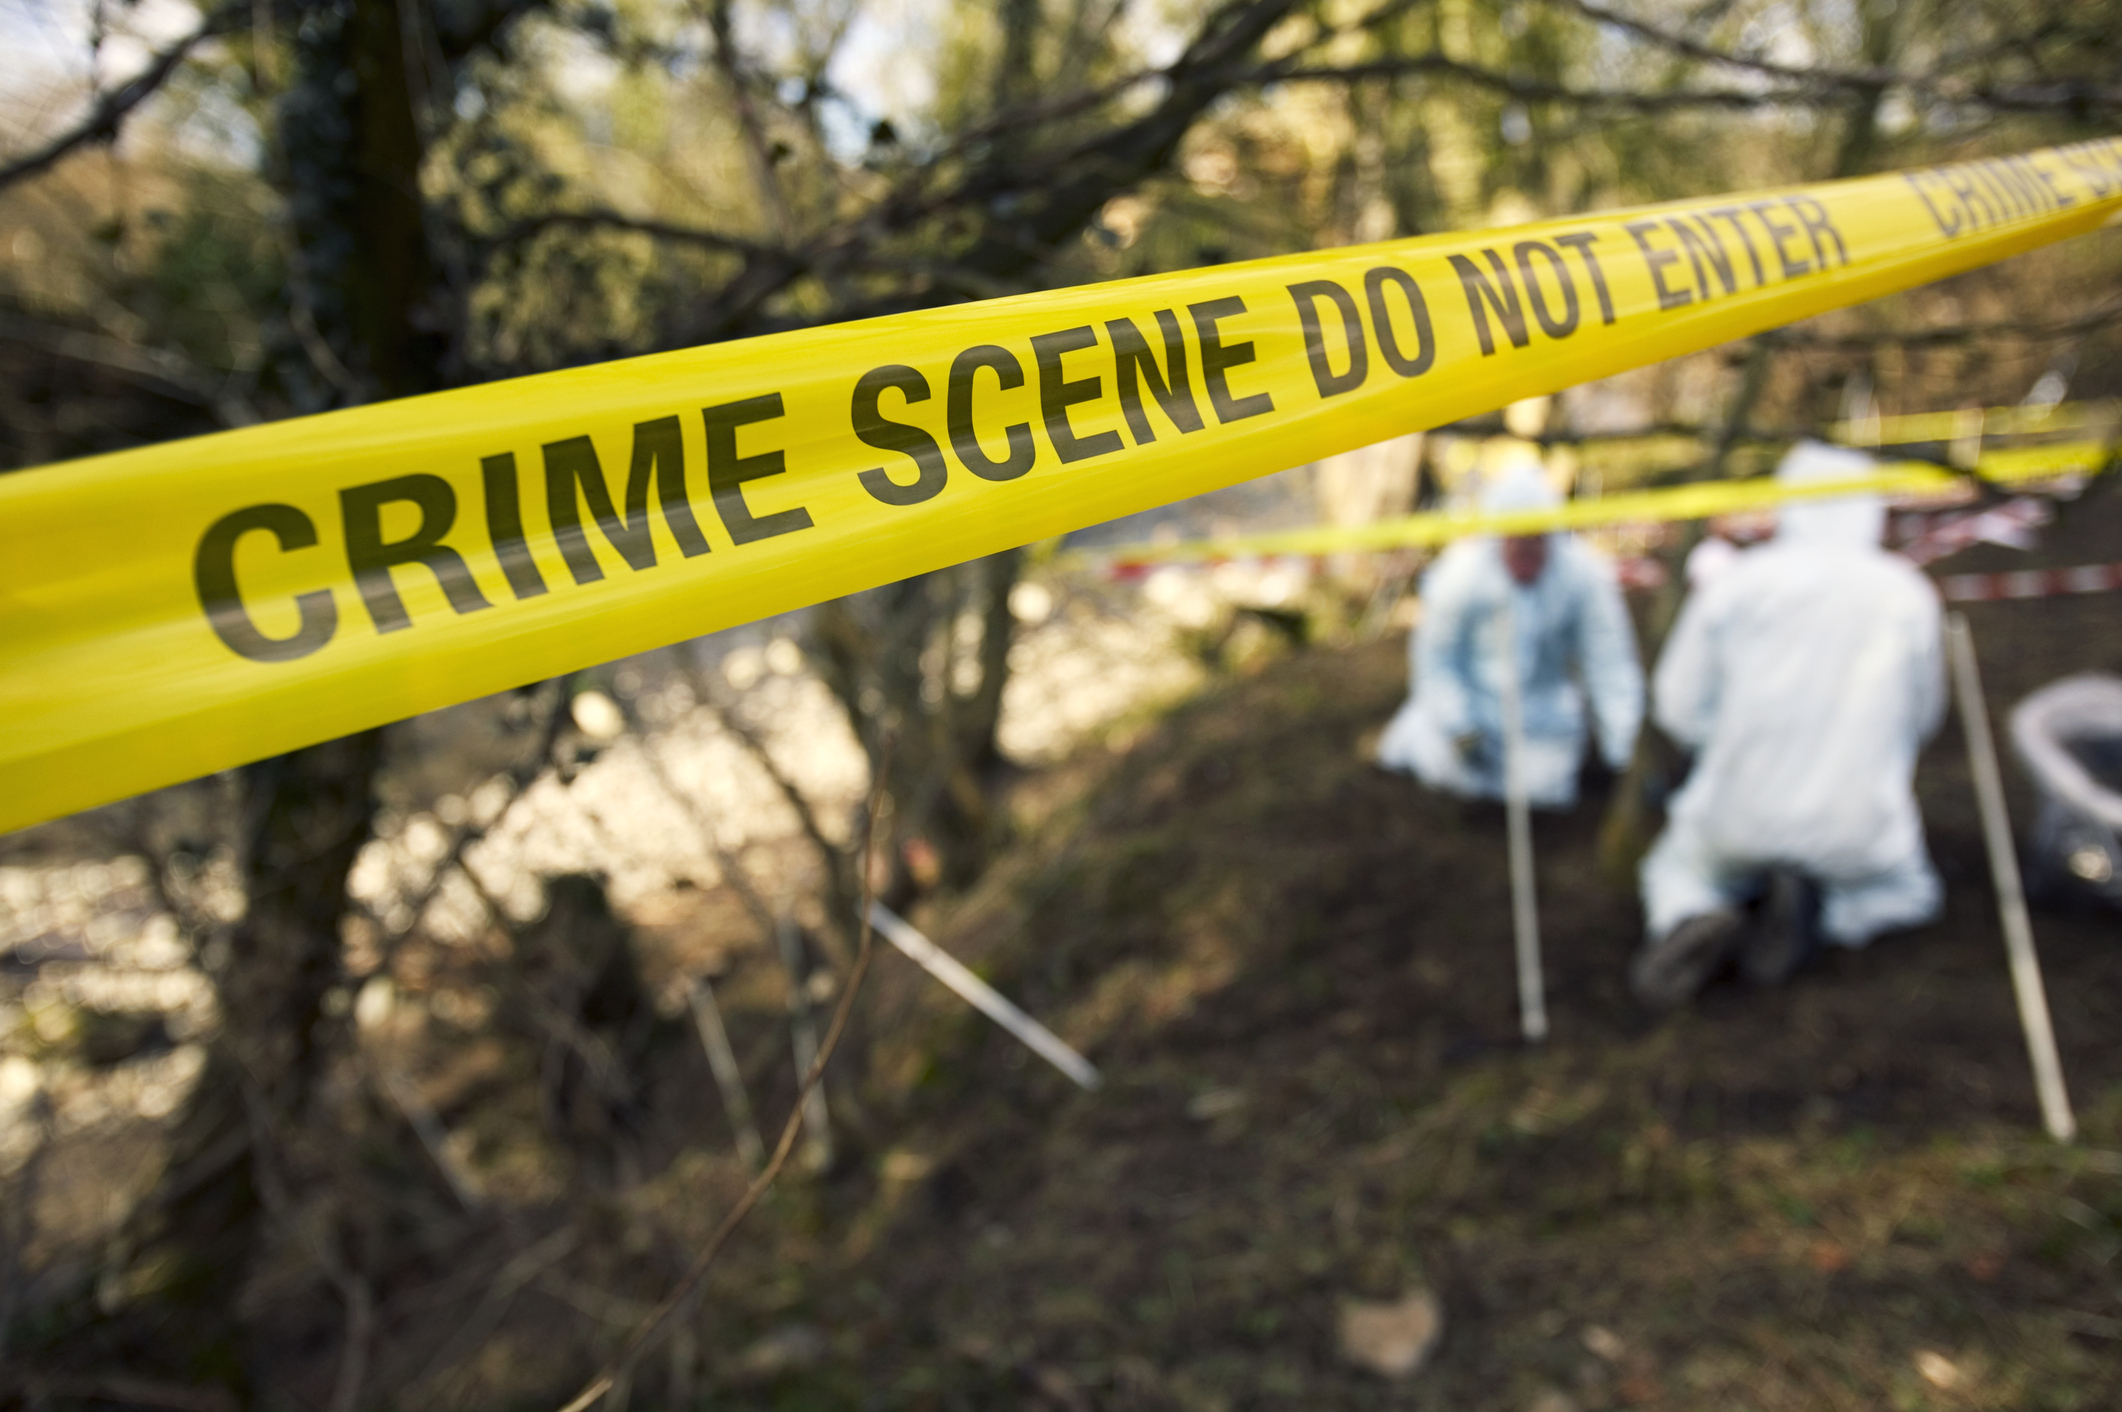 Portland police dismiss serial killer suspicions following 6 women’s deaths.